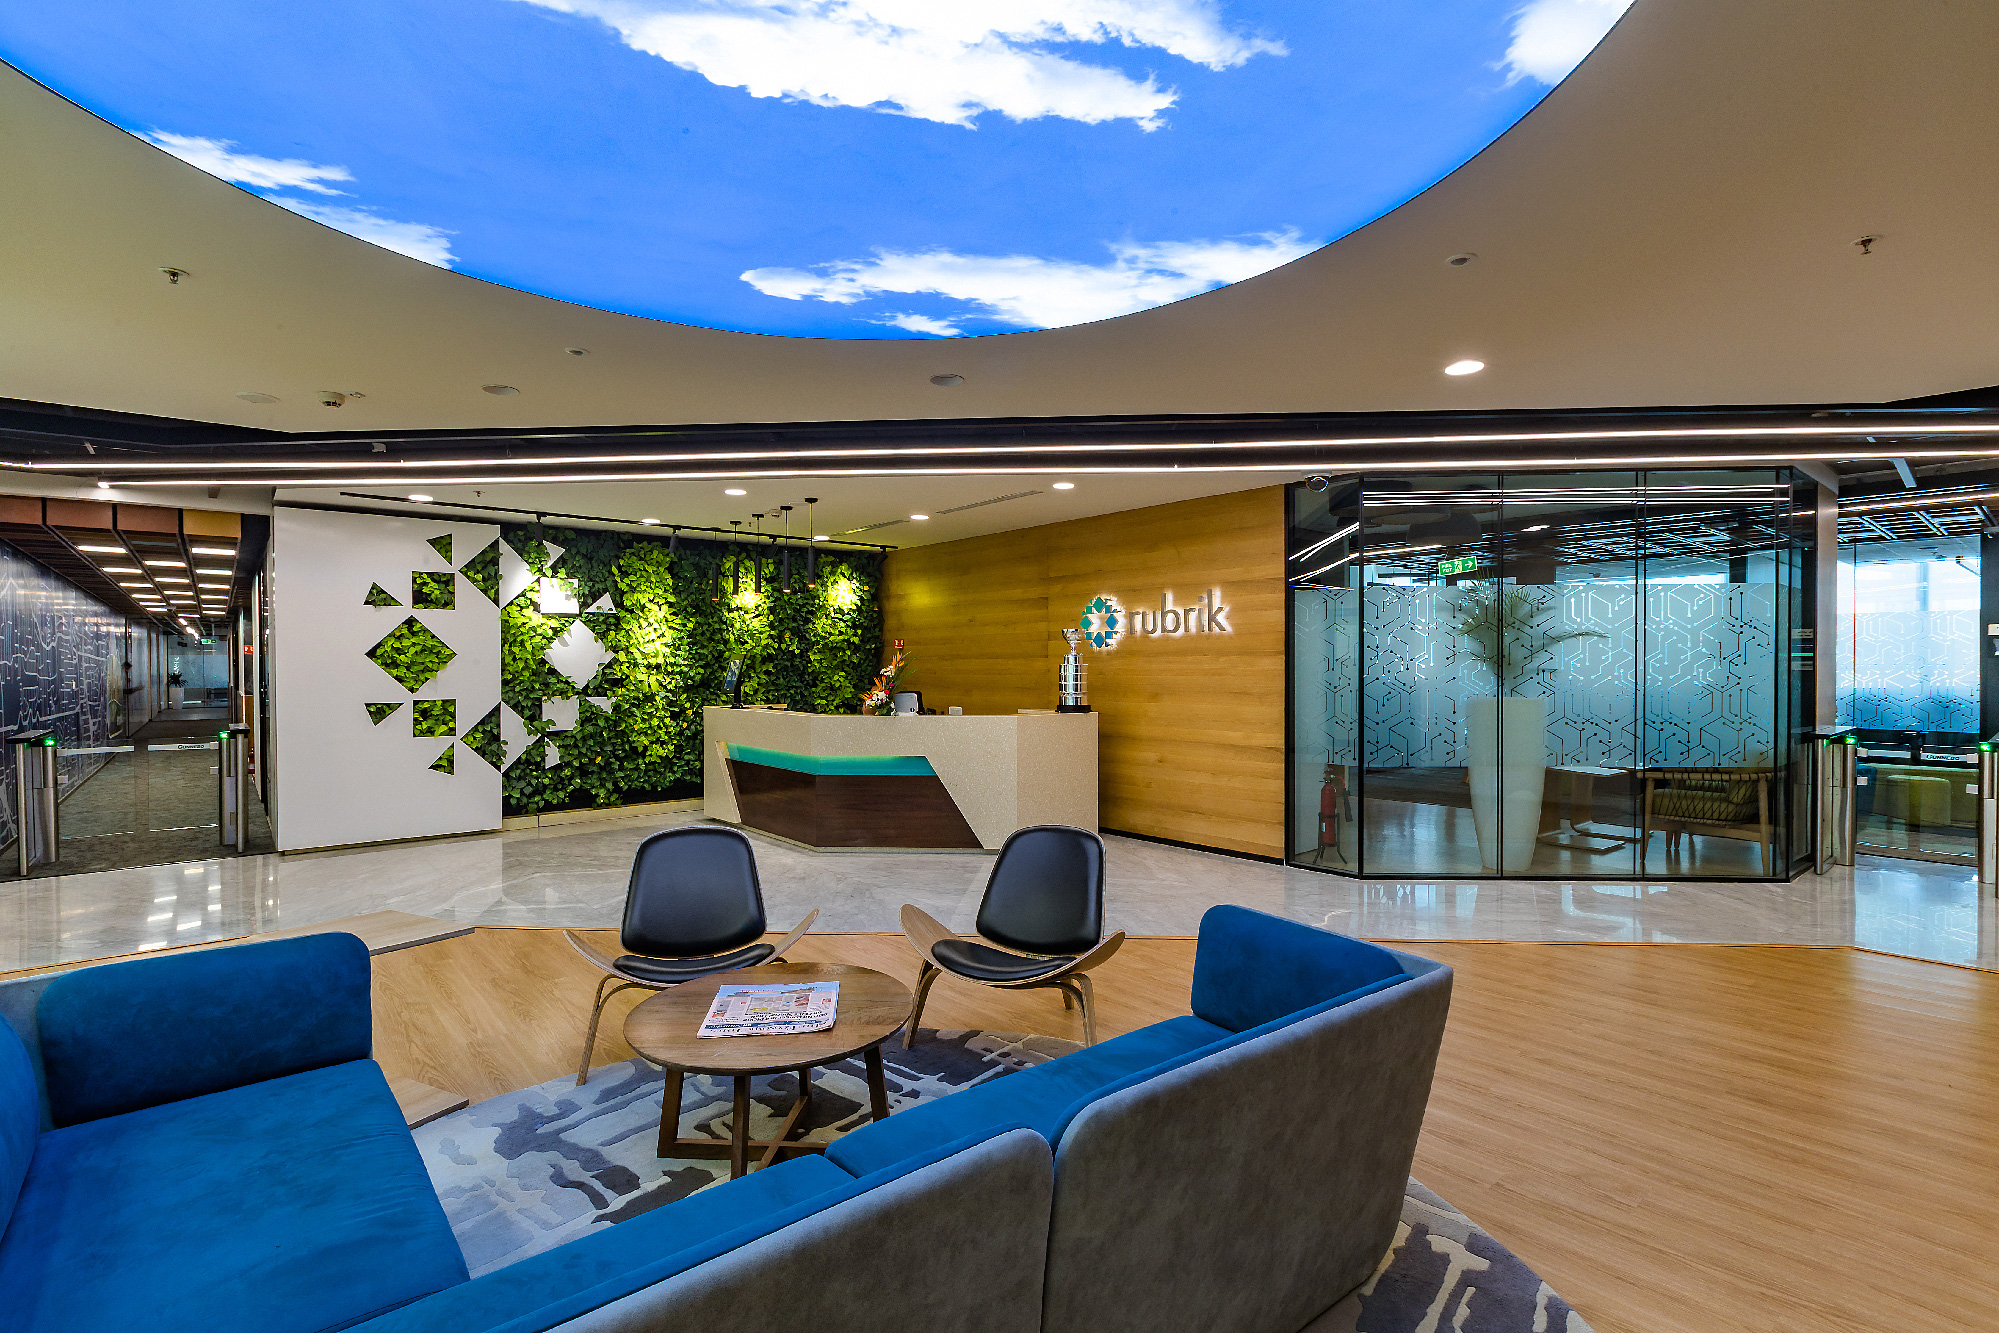 Rubrik Bangalore office: sustainable workplace design